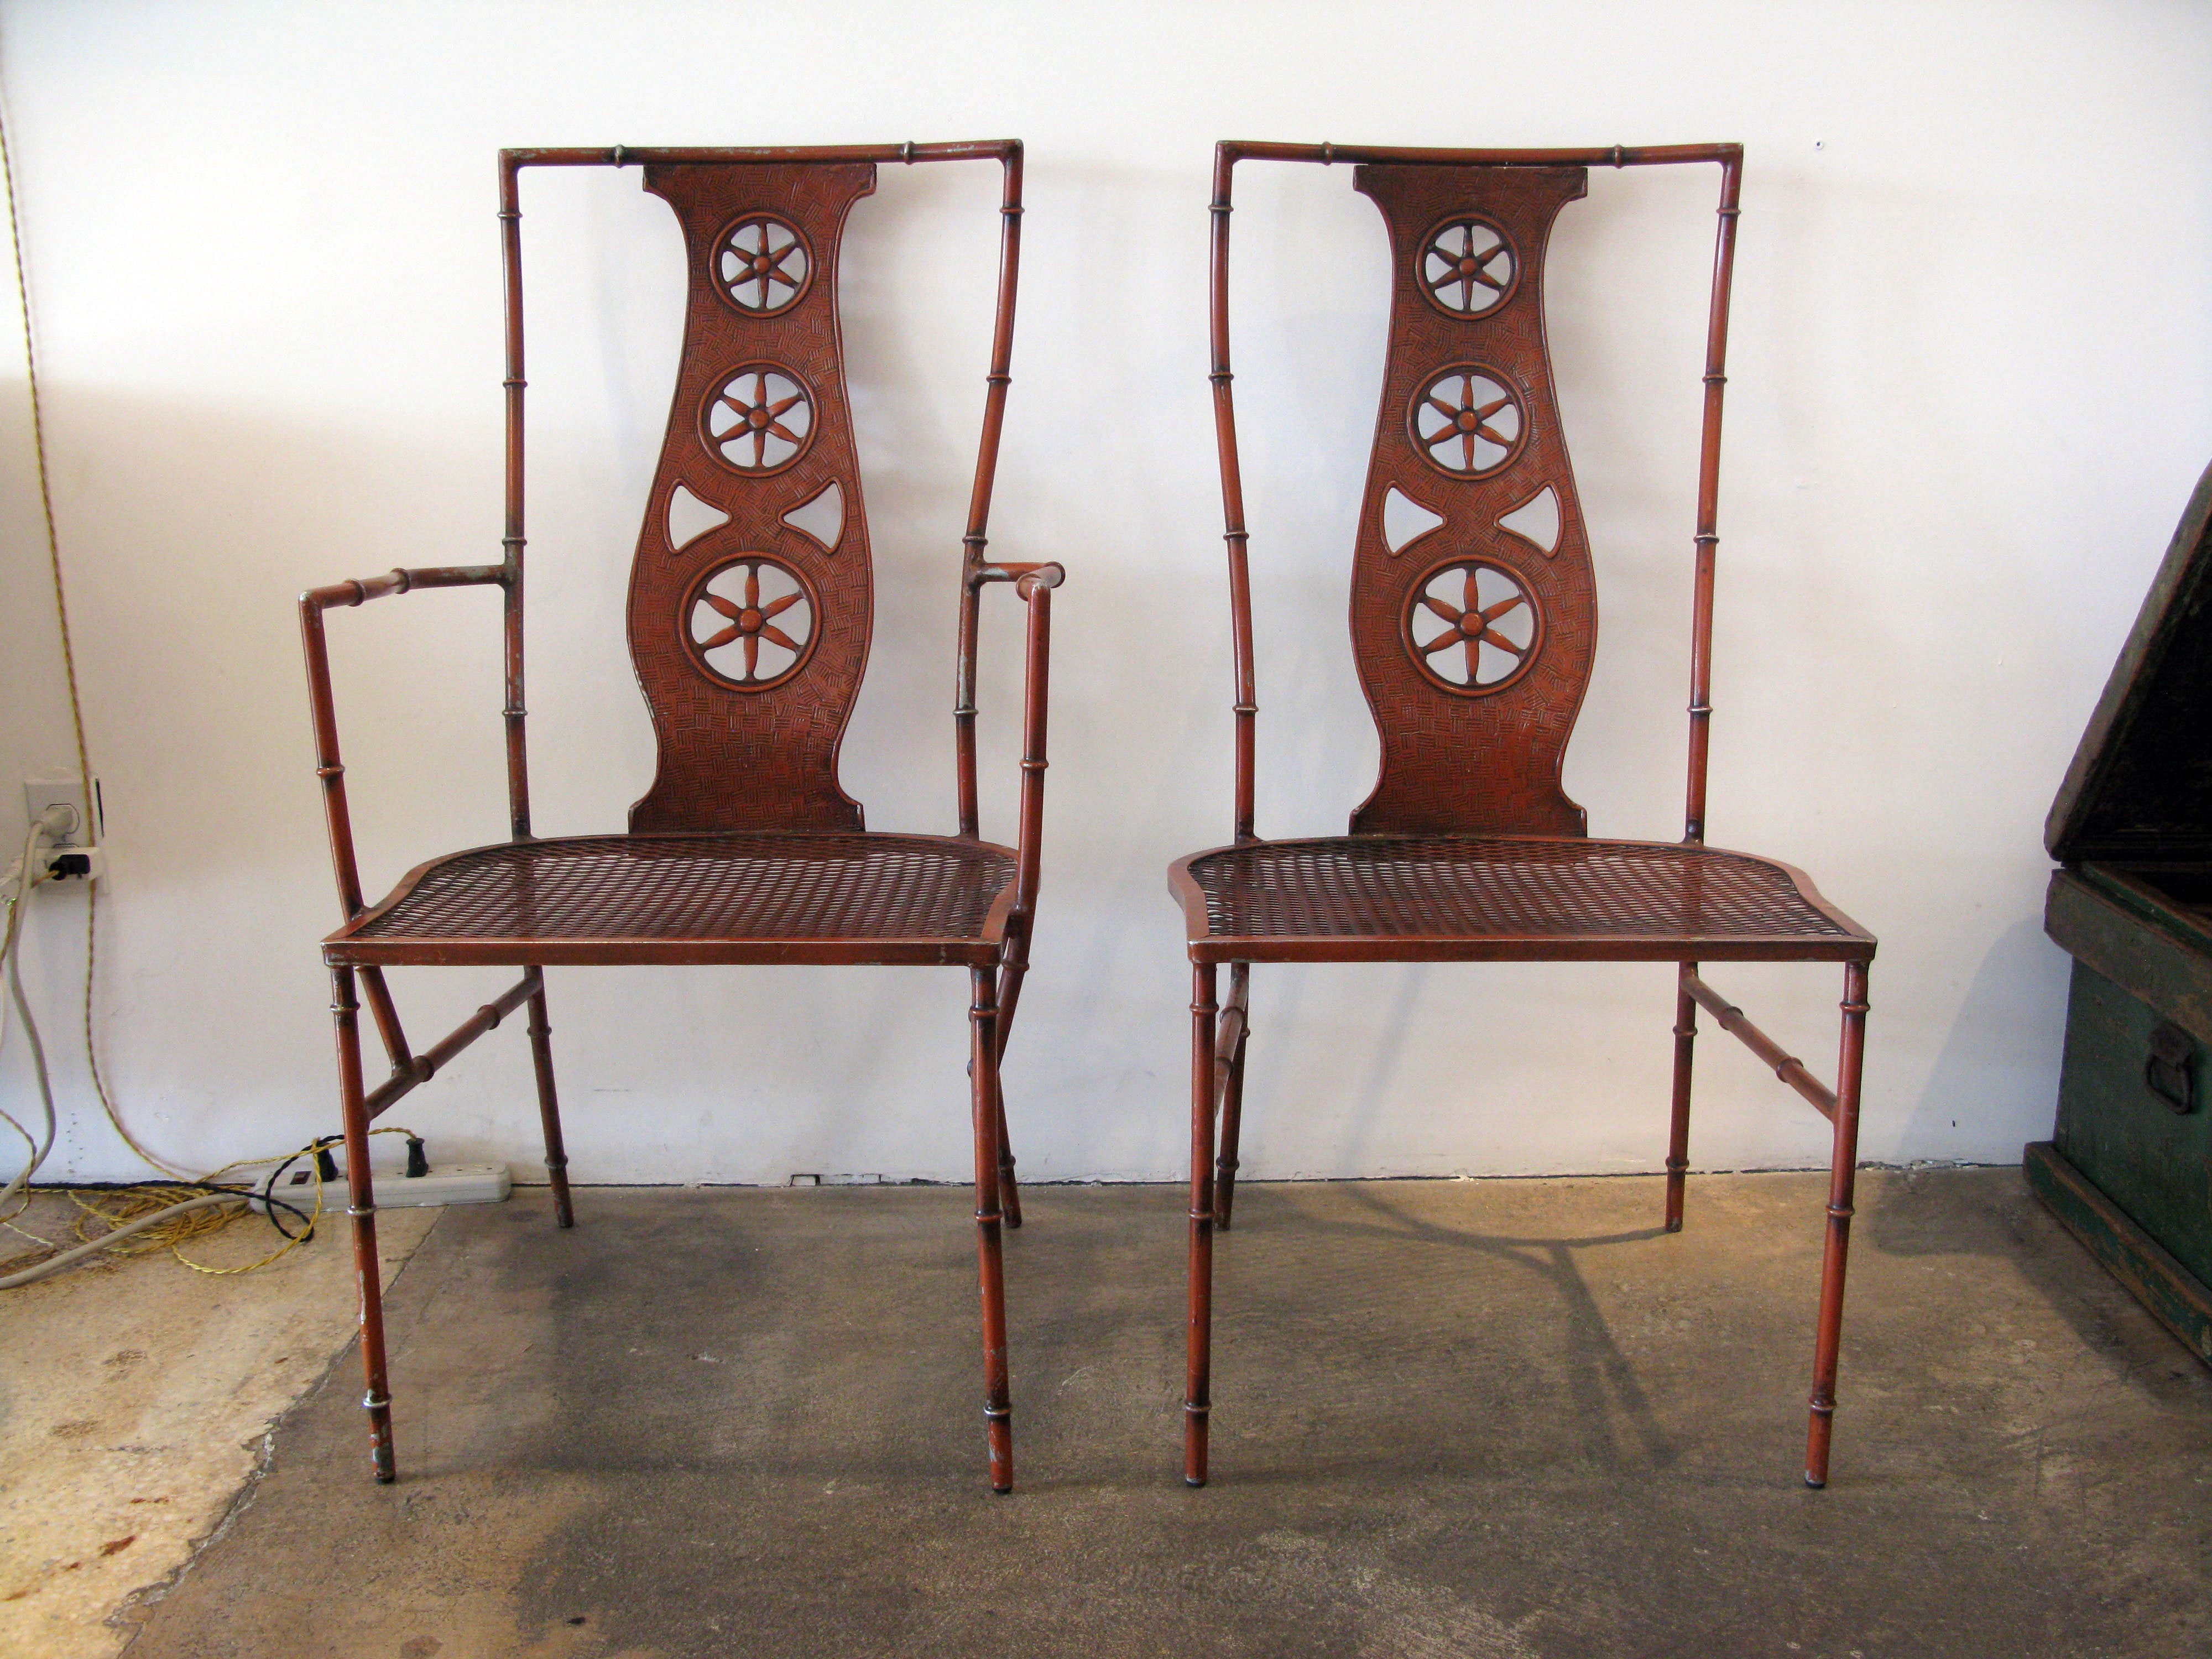 Set of 4 Rare Salterini "Montego" Chairs